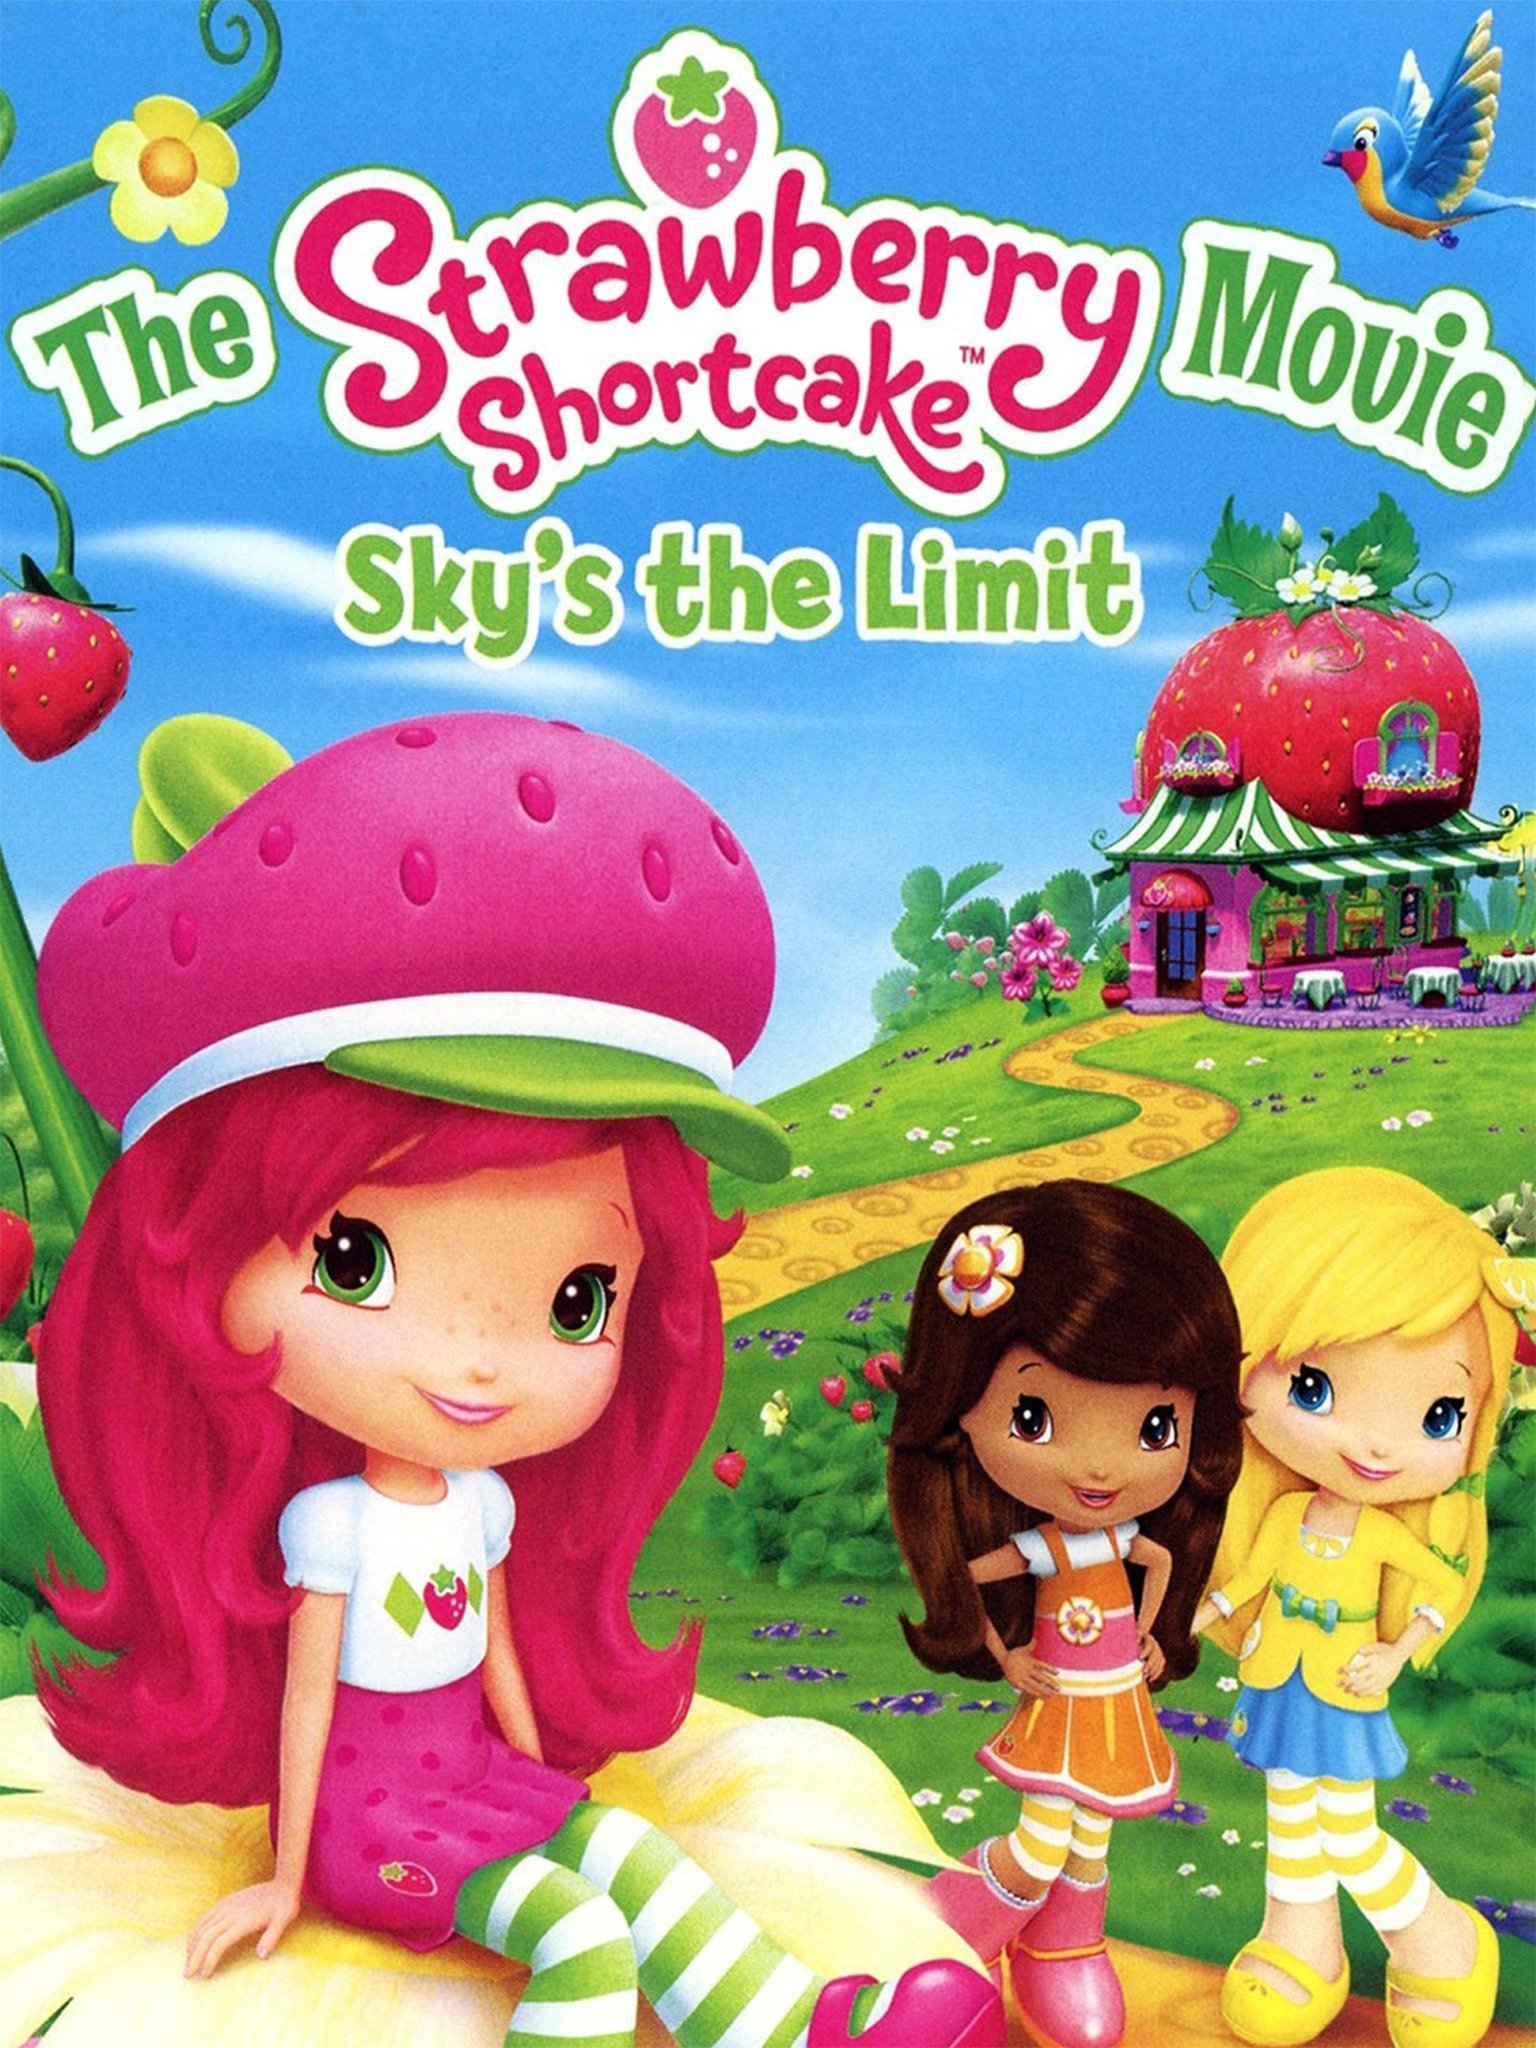 Strawberry Shortcake Old Movies